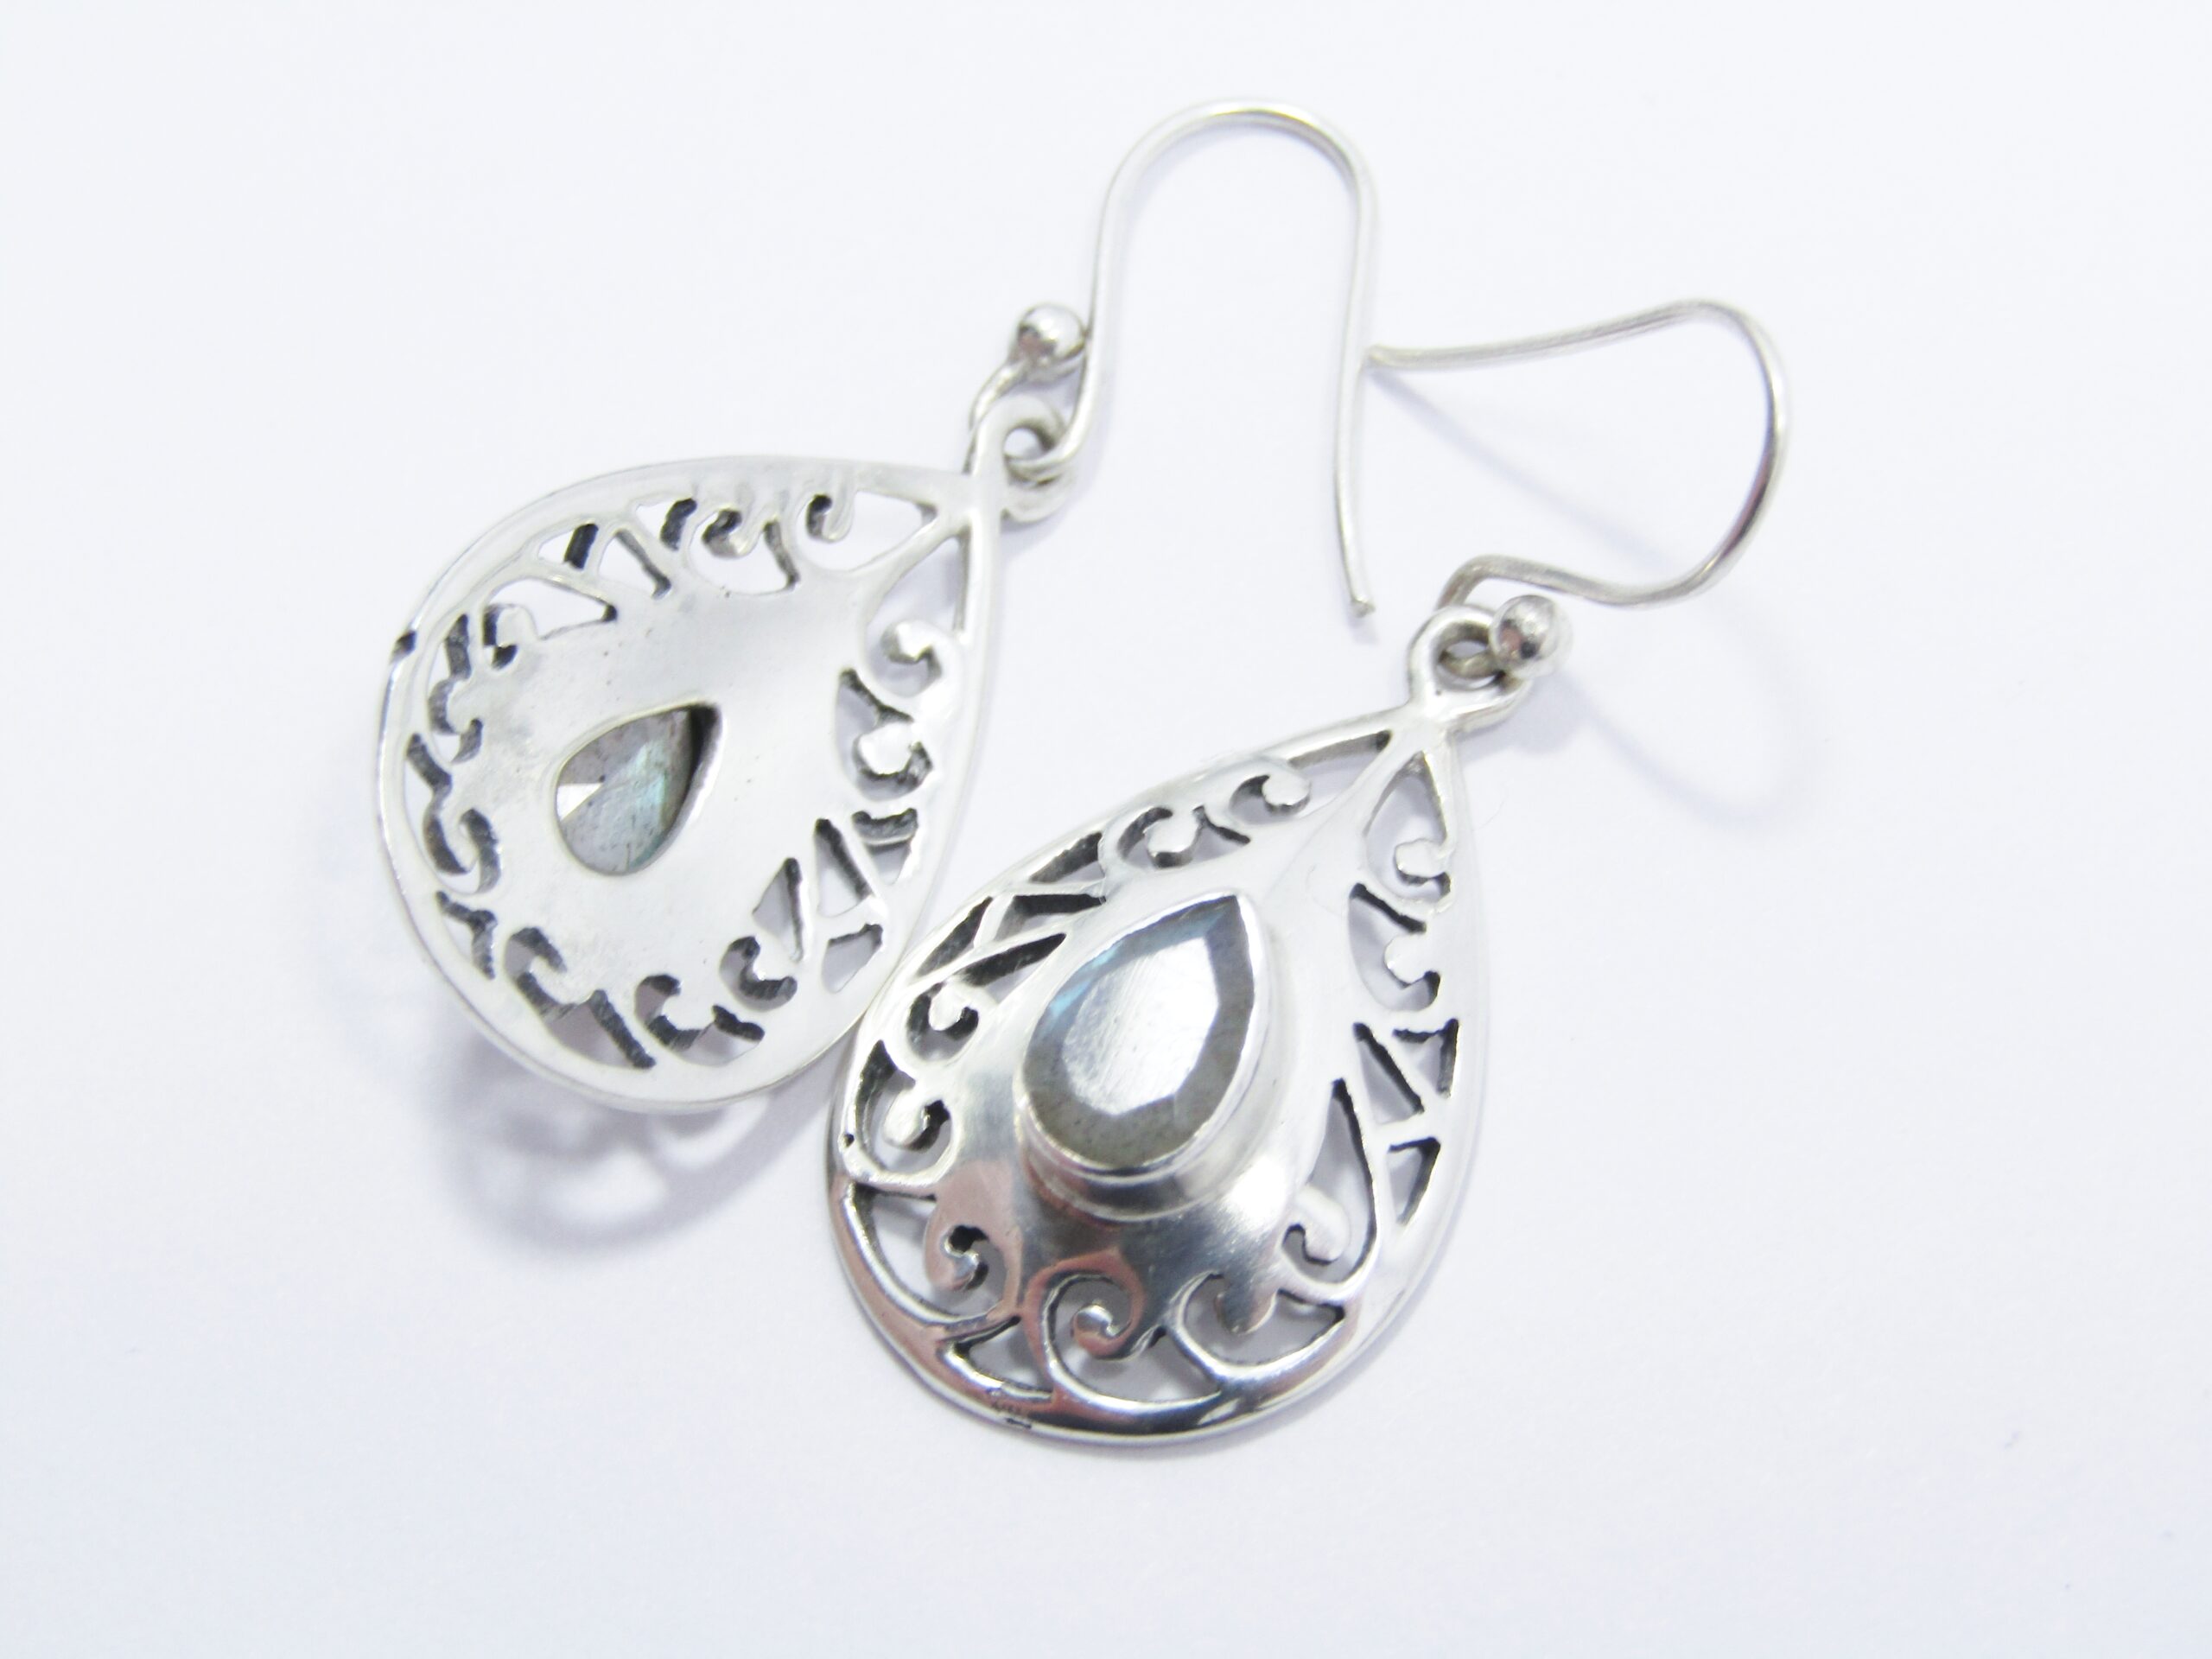 A Lovely Pair of Labradorite Dangling Earrings in Sterling Silver